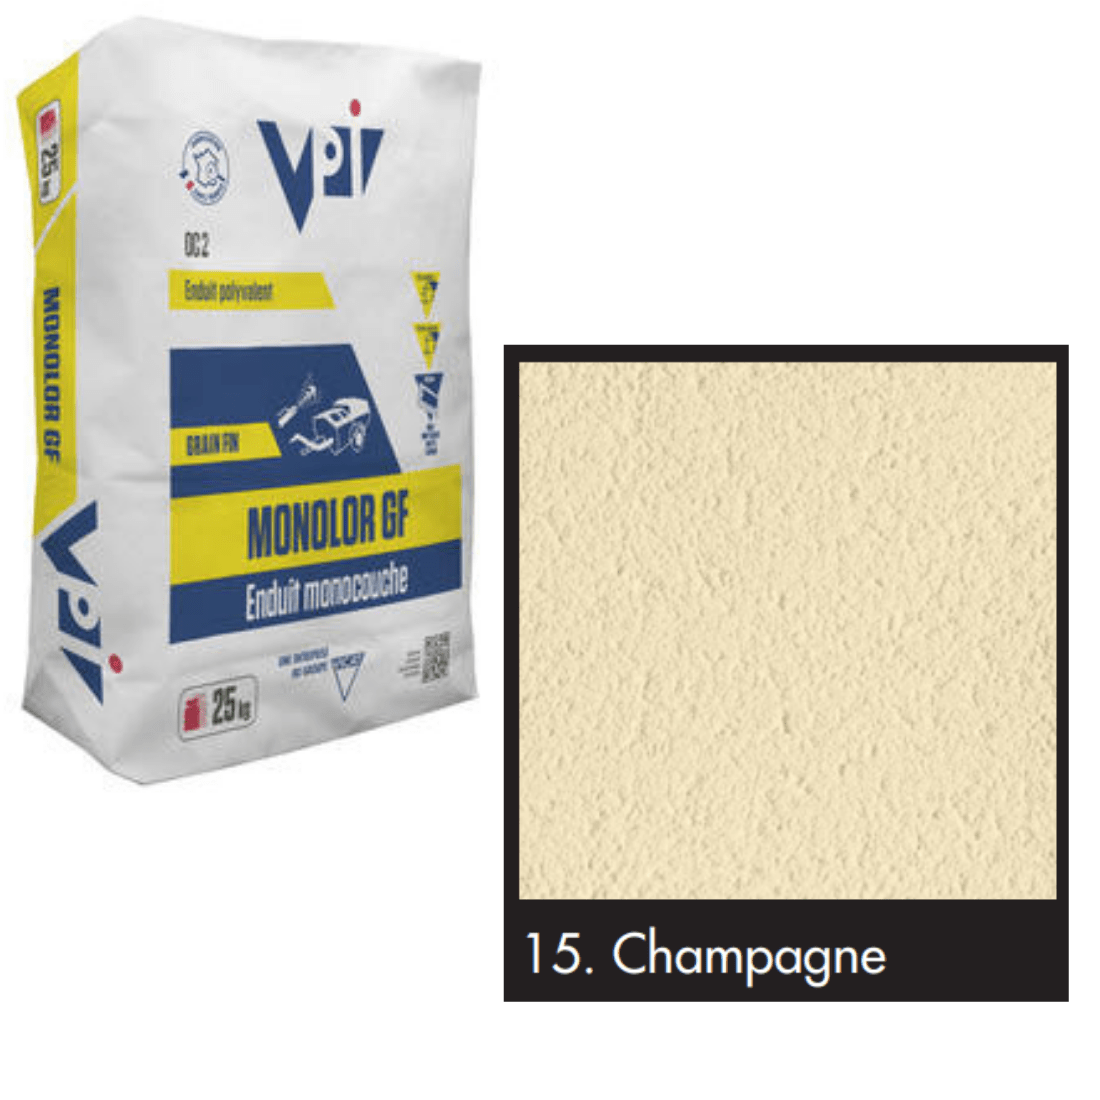 VPI Monocal GM15 Champagne 25kg - Builders Merchant Direct